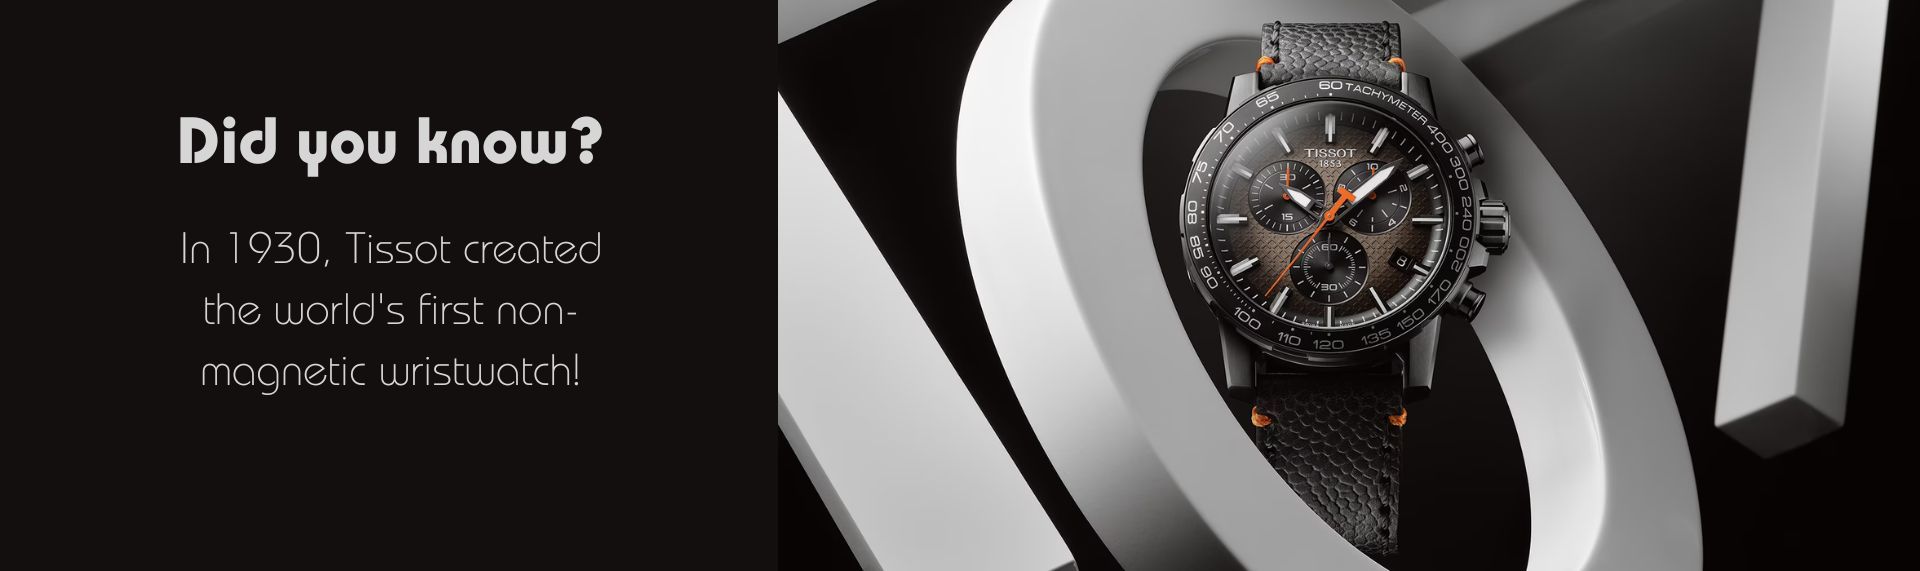 Tissot watch banner non-magnetic wristwatch